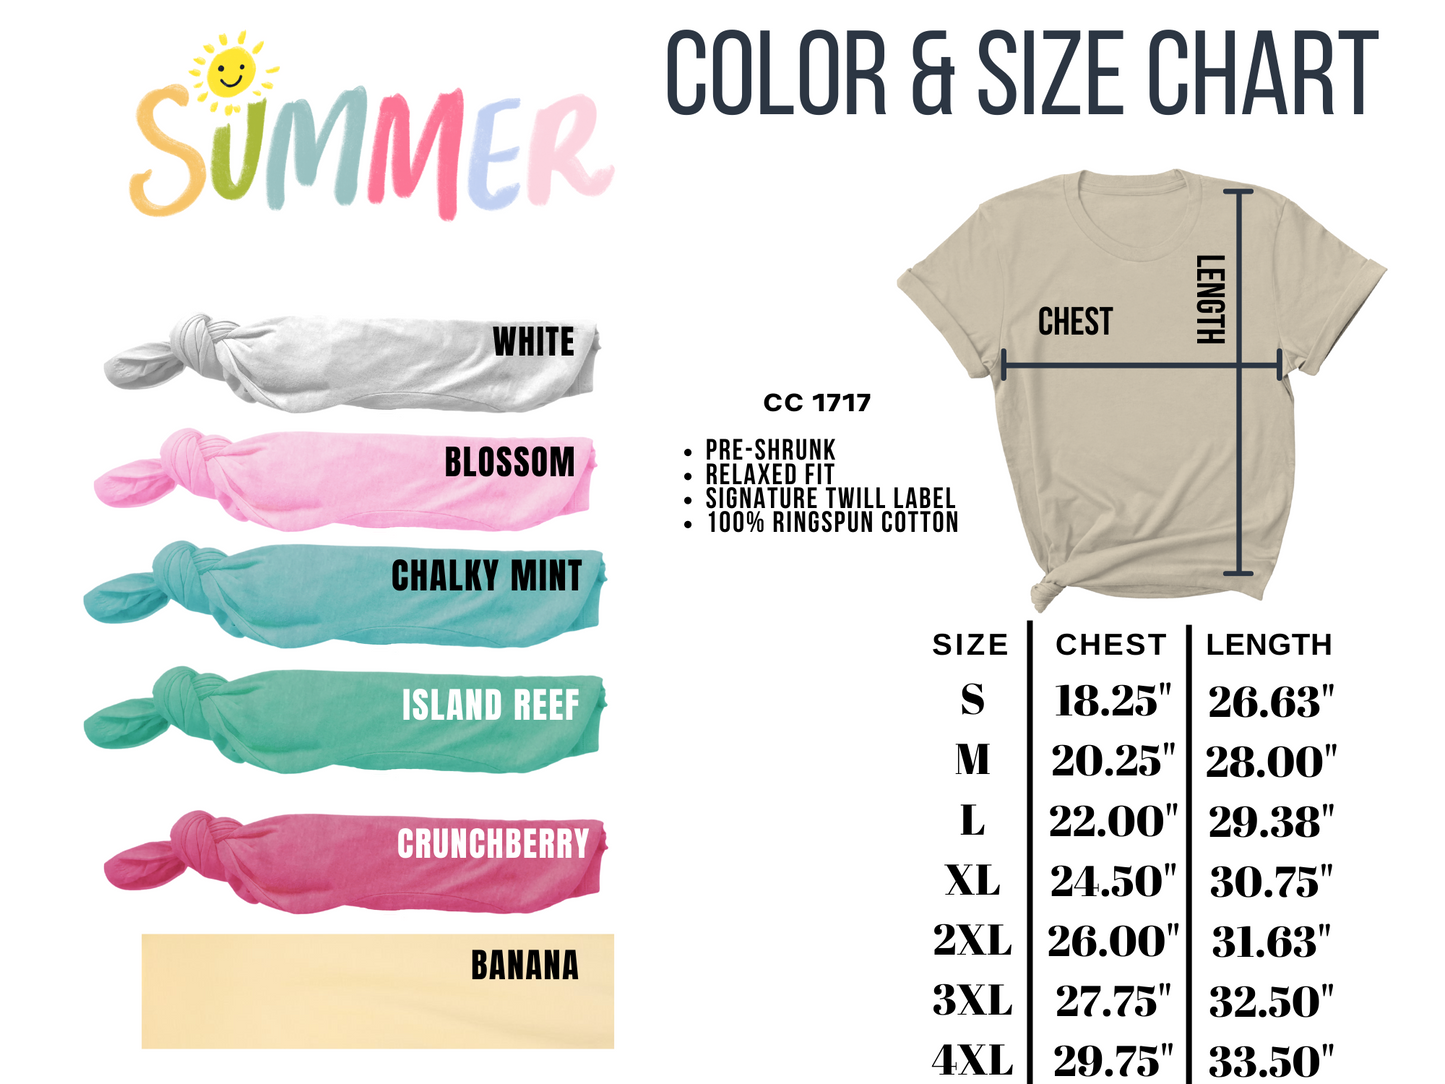 Choose Kindness Comfort Colors T-Shirt